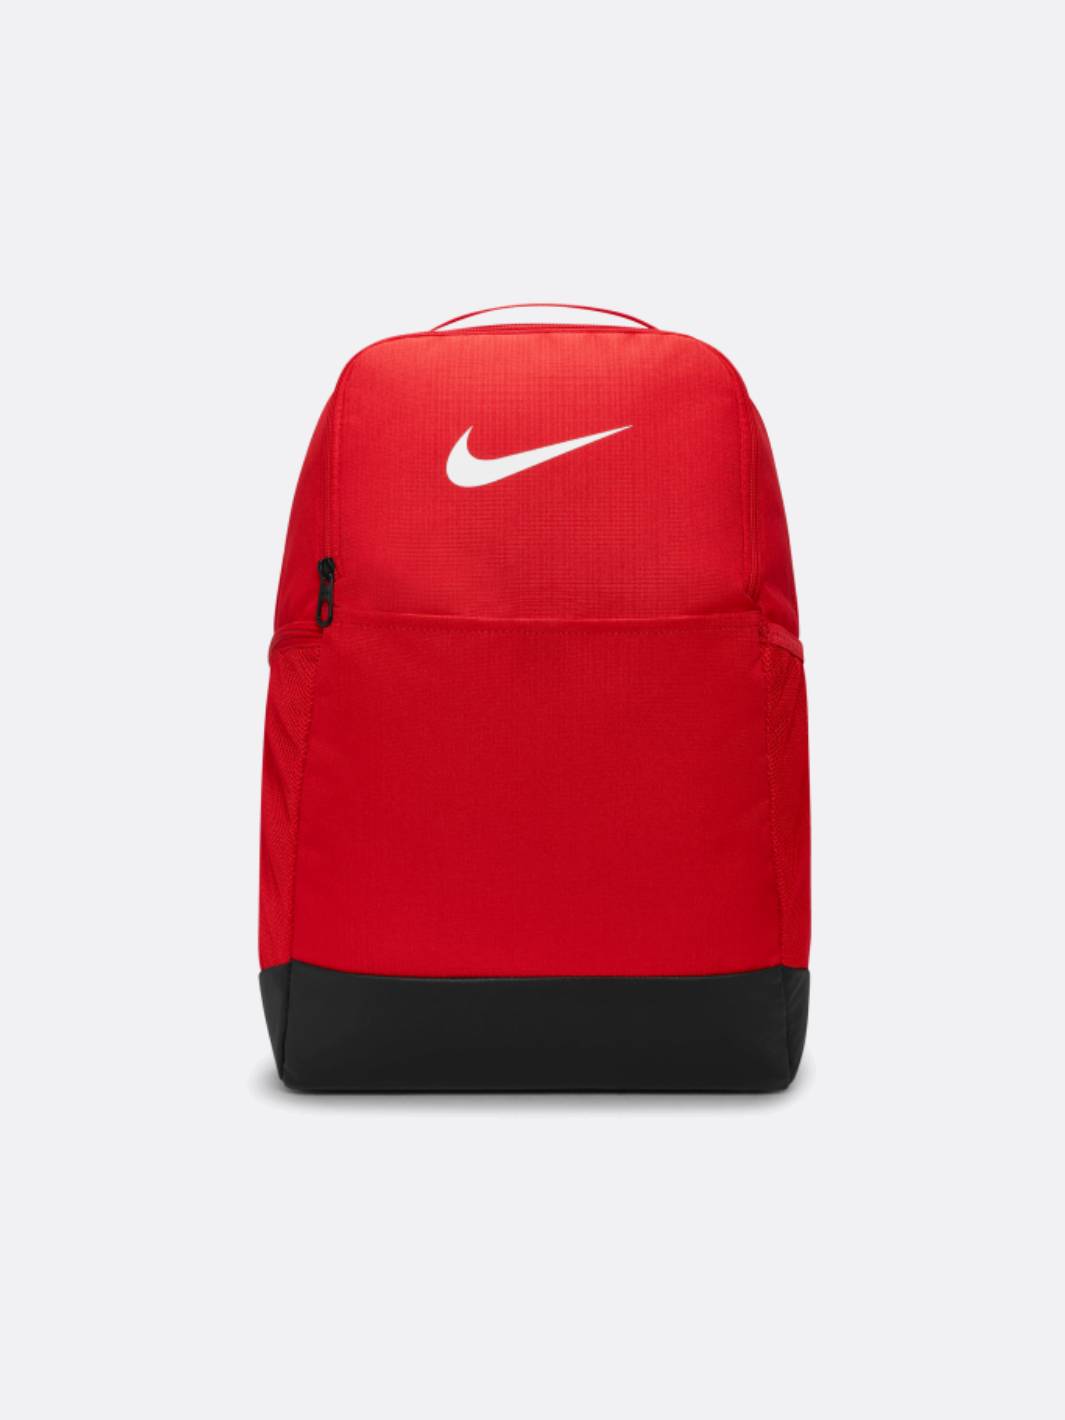 Nike Air Hybrid Golf Bag - Best Black Backpack